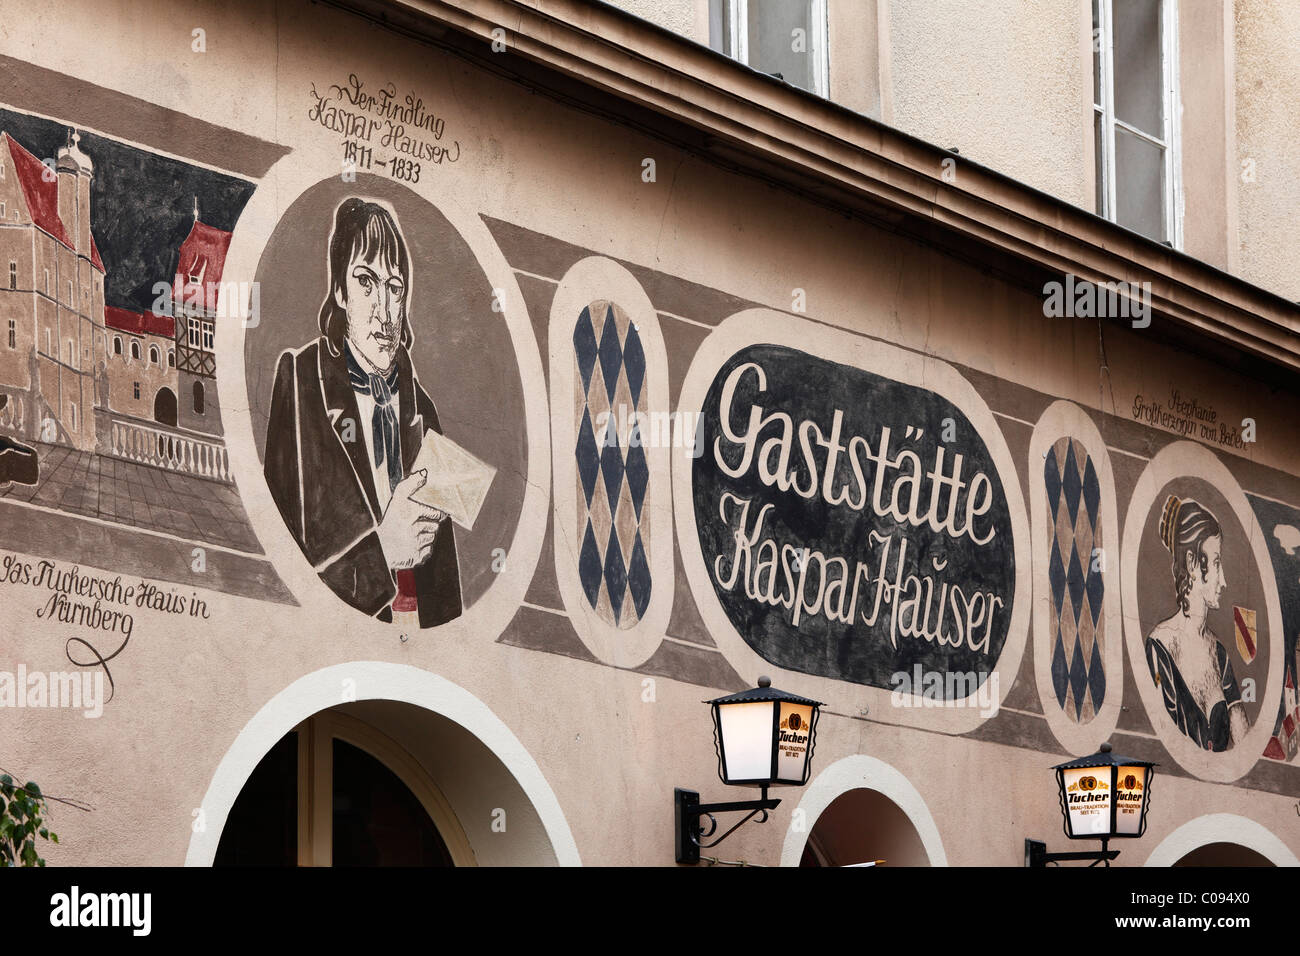 Restaurant Kaspar Hauser, Ansbach, Middle Franconia, Franconia, Bavaria, Germany, Europe Stock Photo